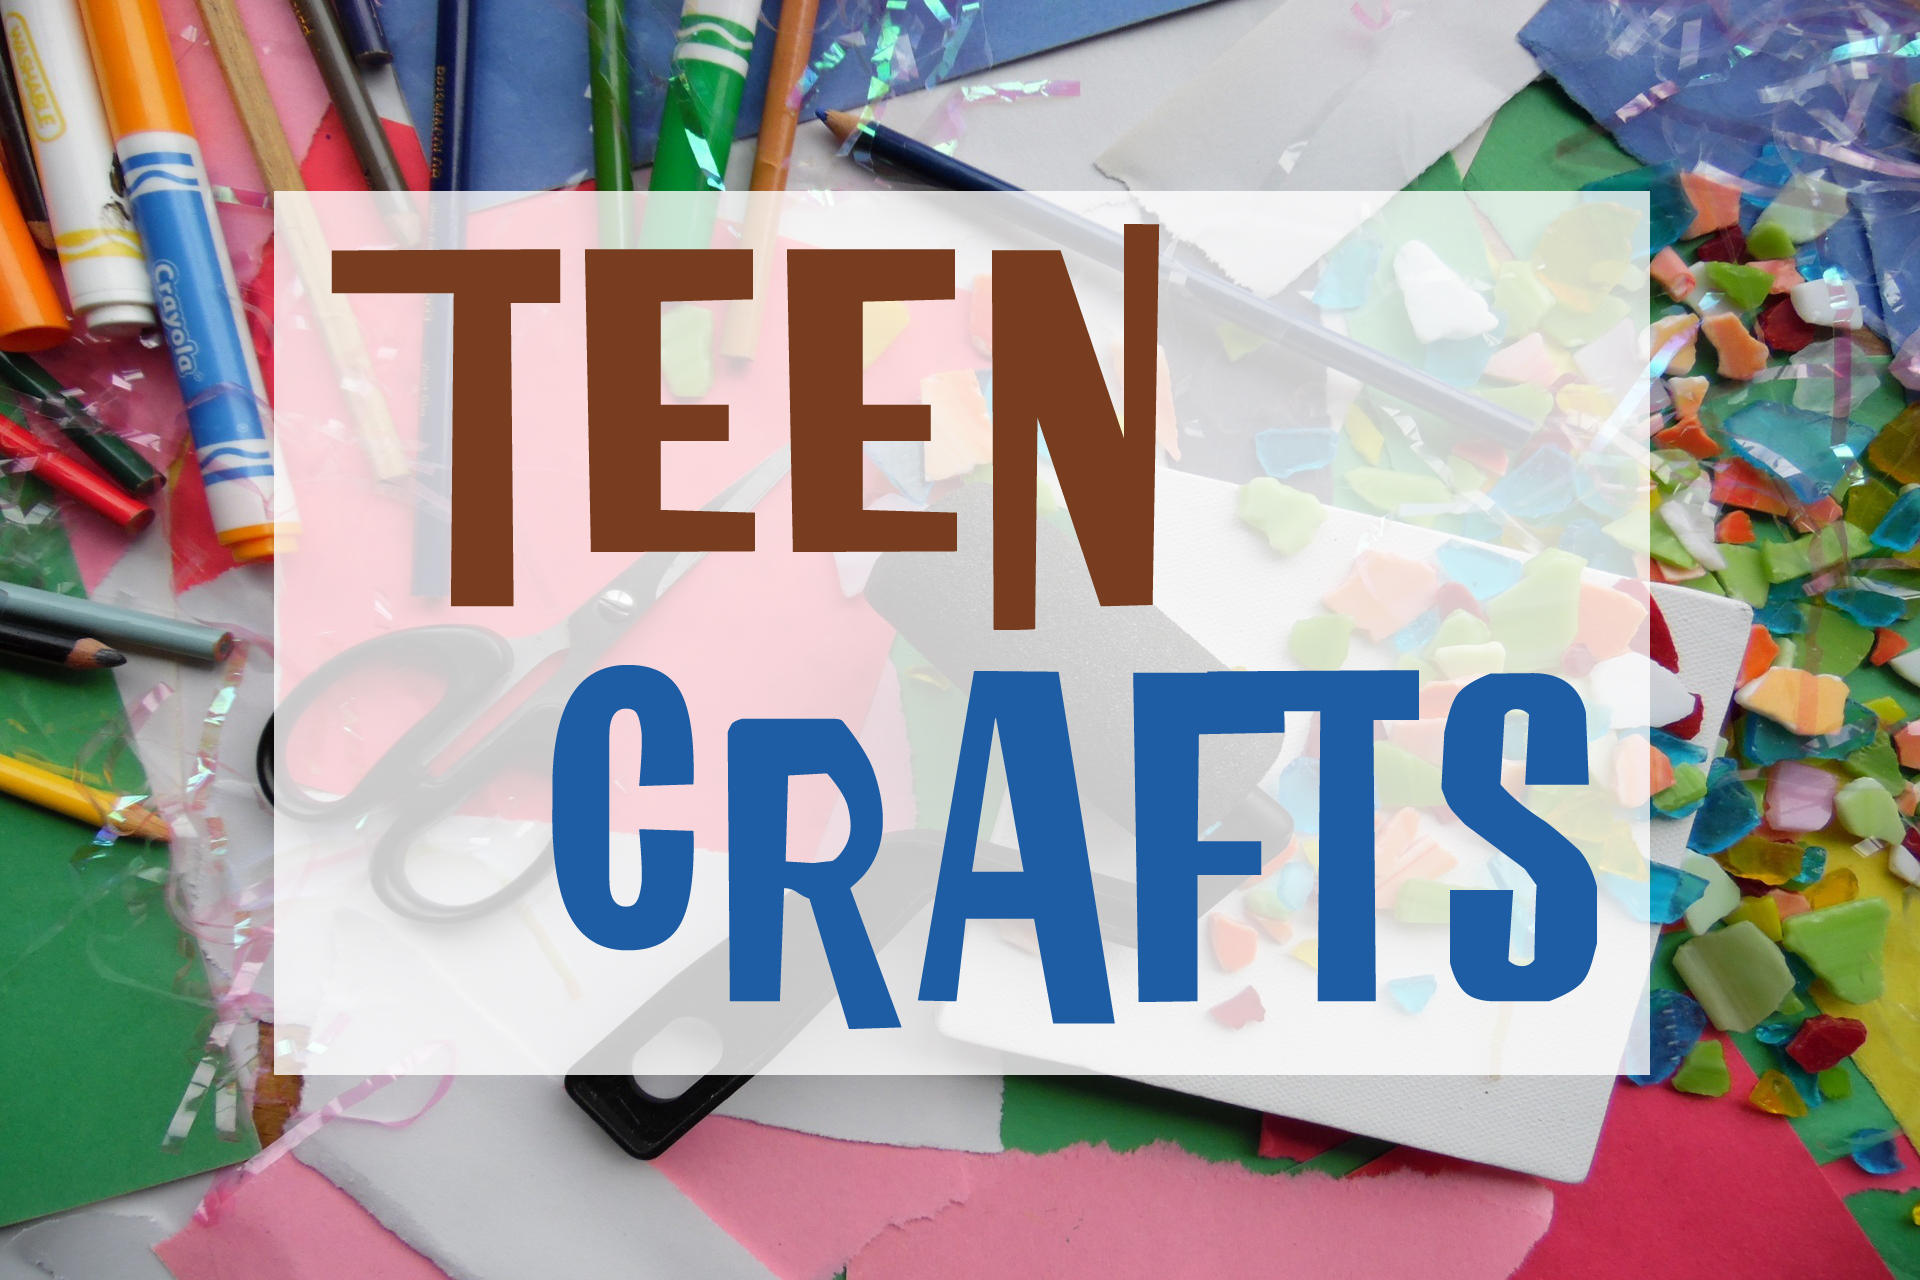 Teen Craft Days